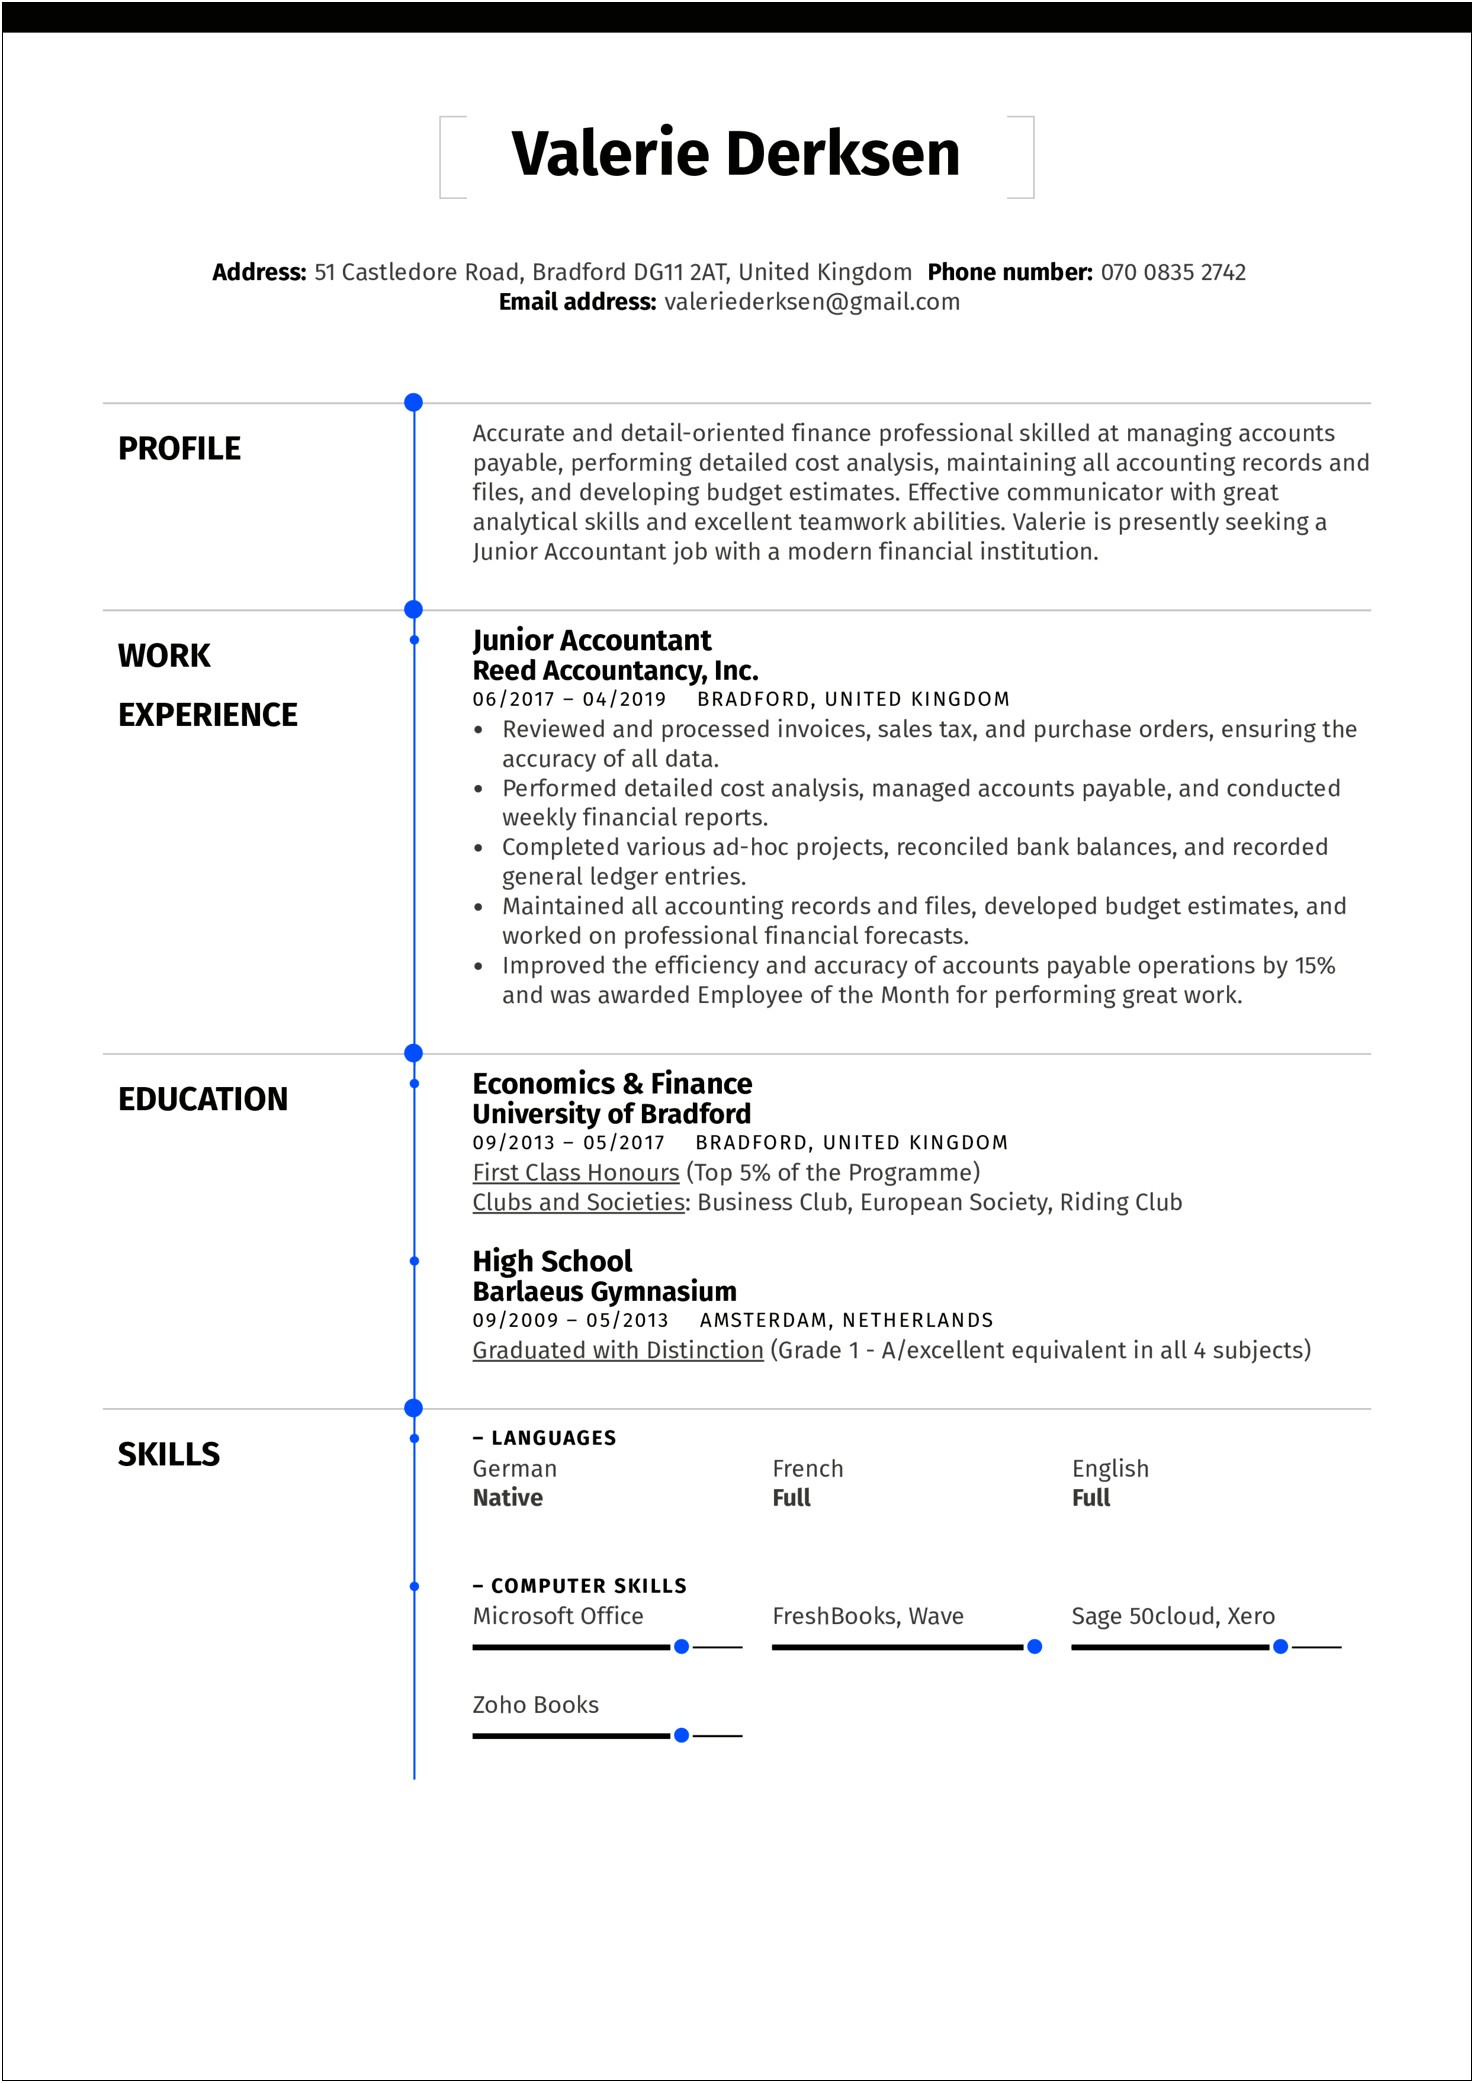 Resume Executive Summary For Staff Accountant